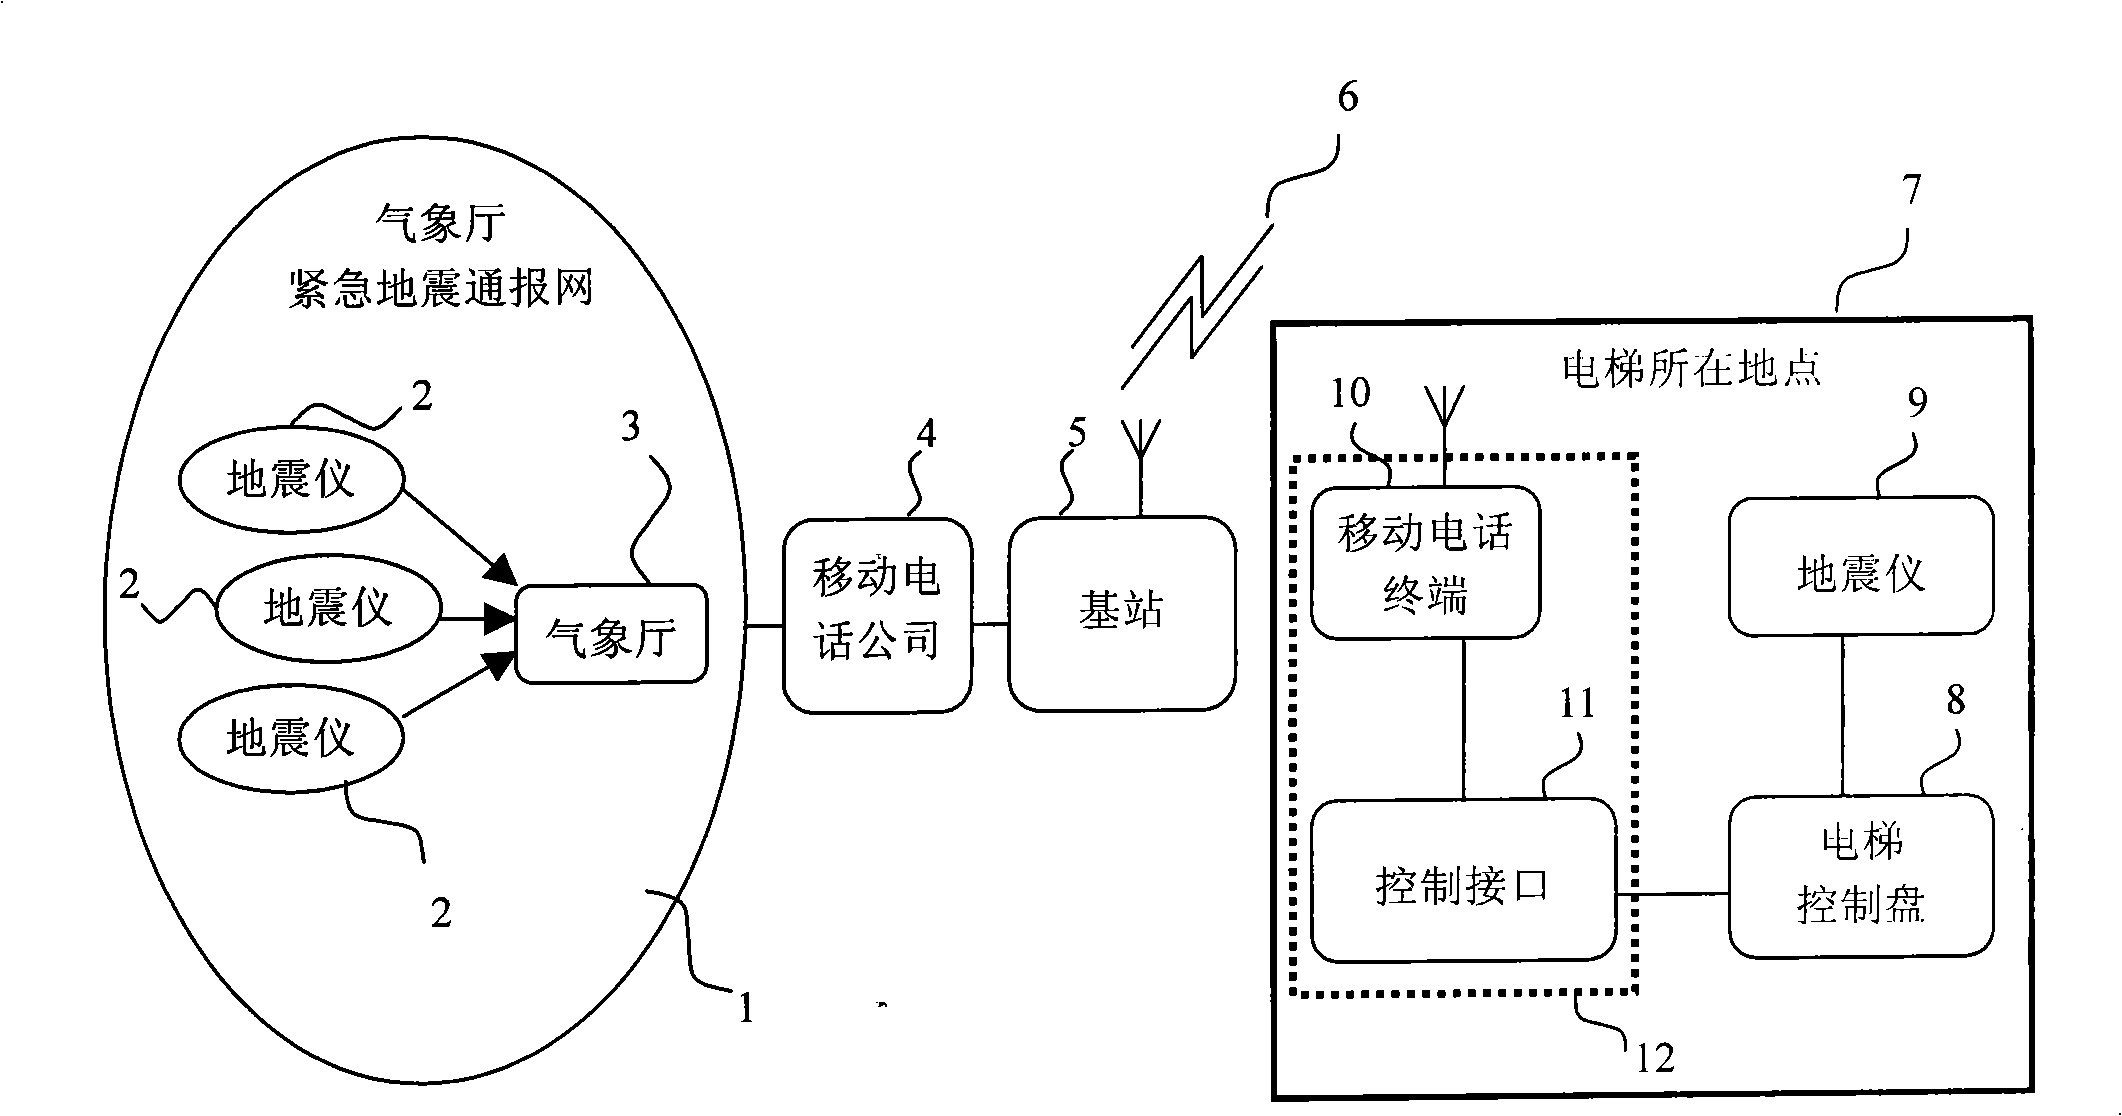 Control apparatus and refit method of elevator